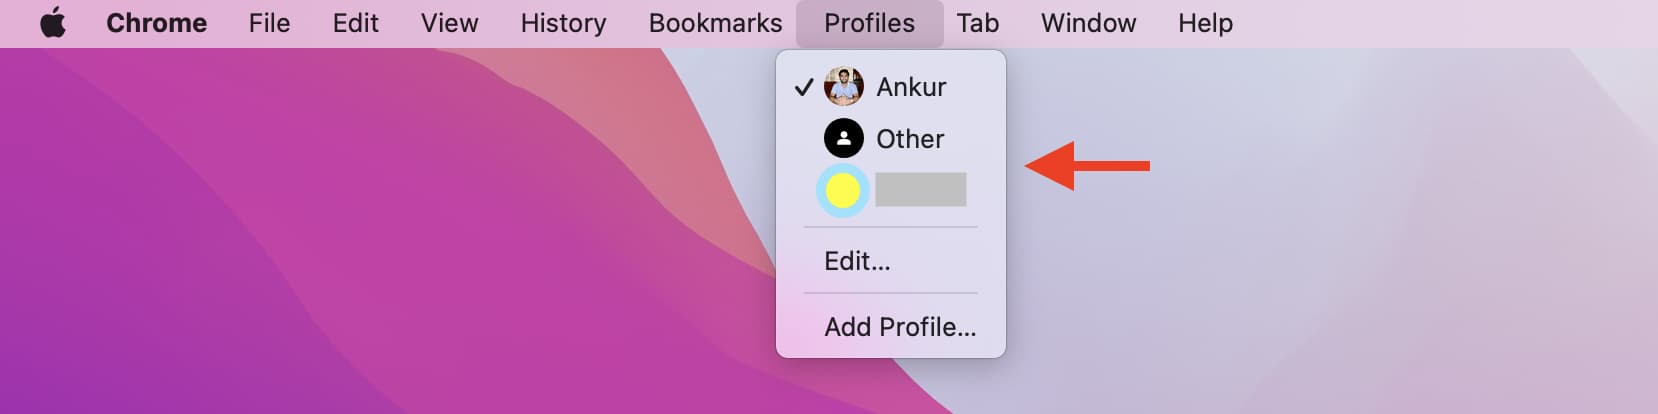 Chrome Profiles Mac